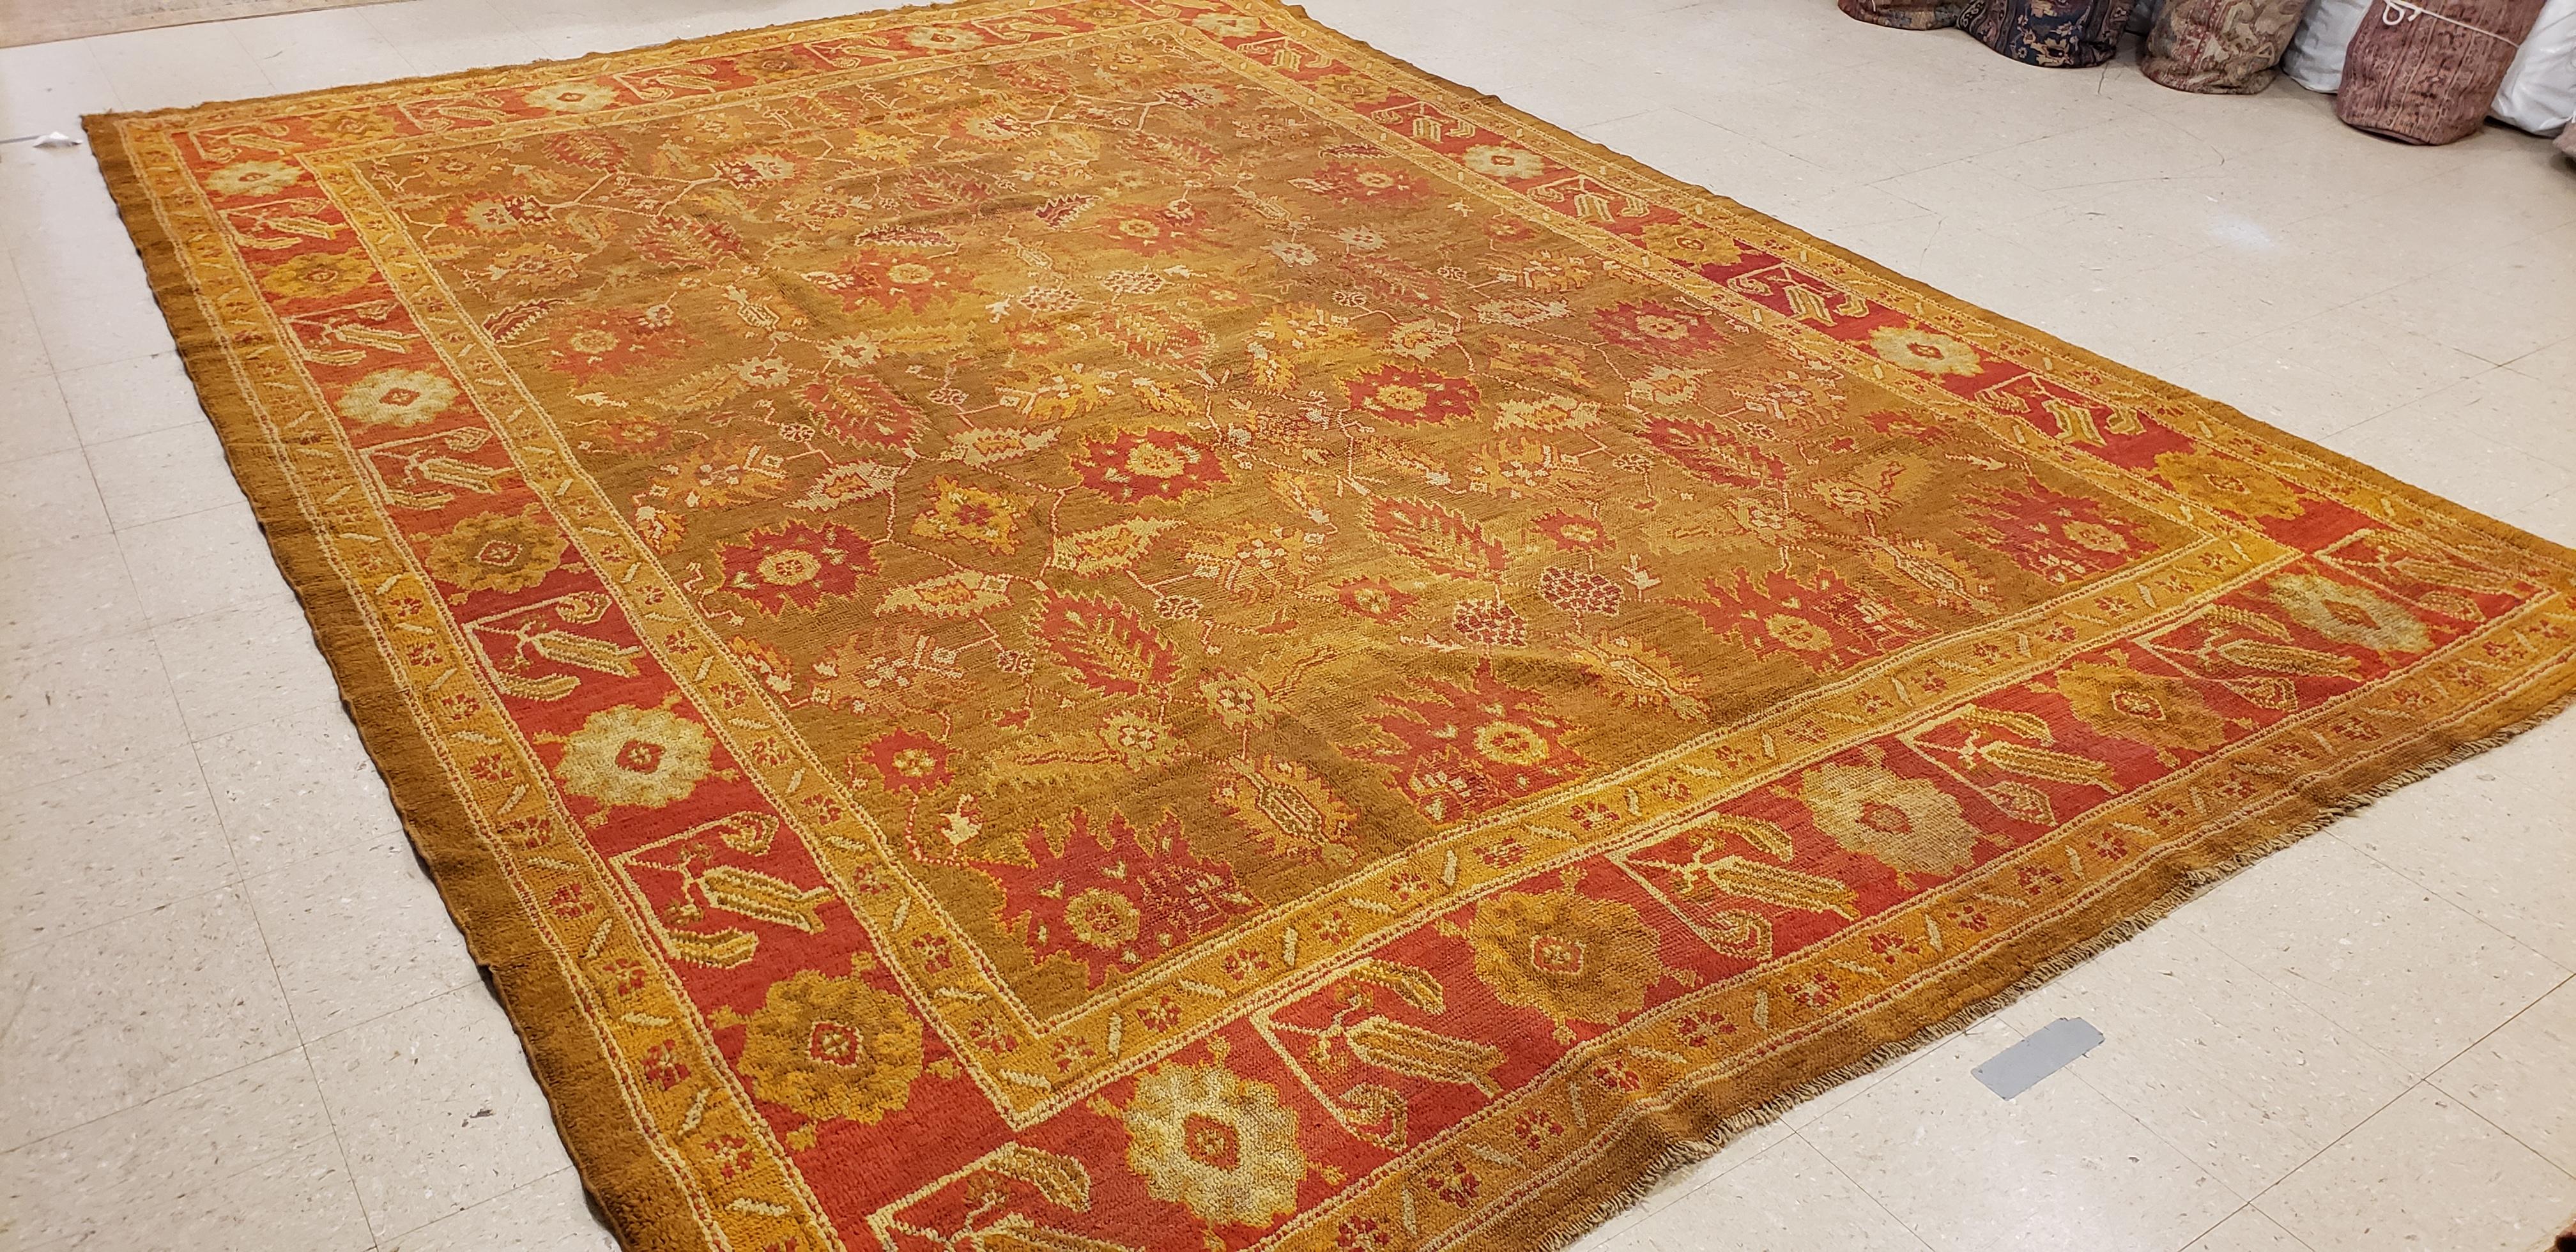 Antique Oushak Carpet, Oriental Rug, Handmade Green, Saffron, Ivory and Coral For Sale 1